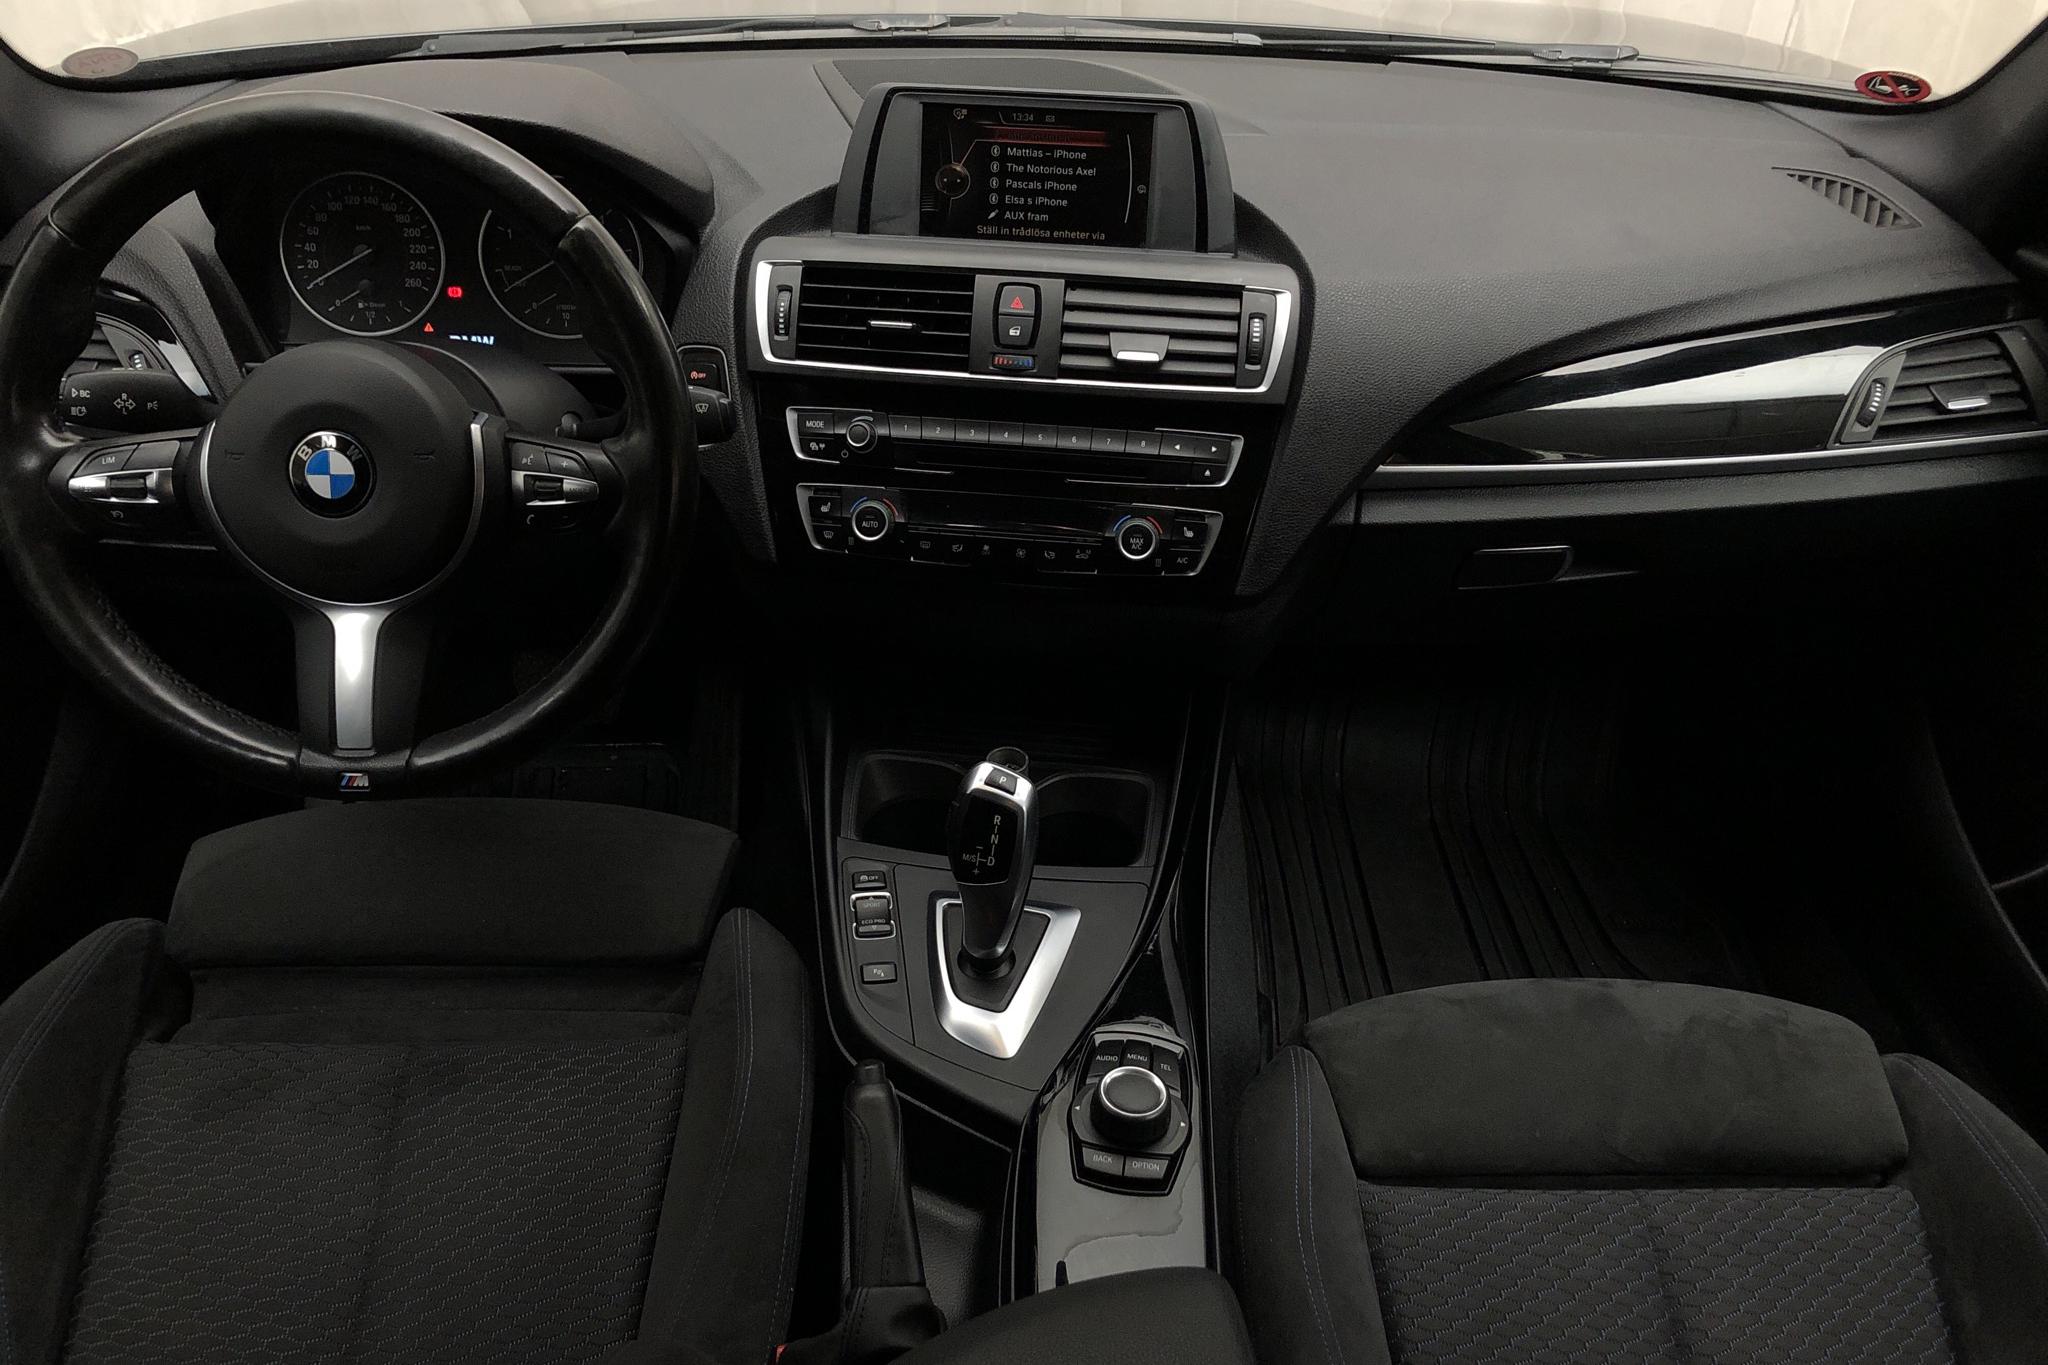 BMW 118d 5dr, F20 (150hk) - 165 750 km - Automatic - black - 2016